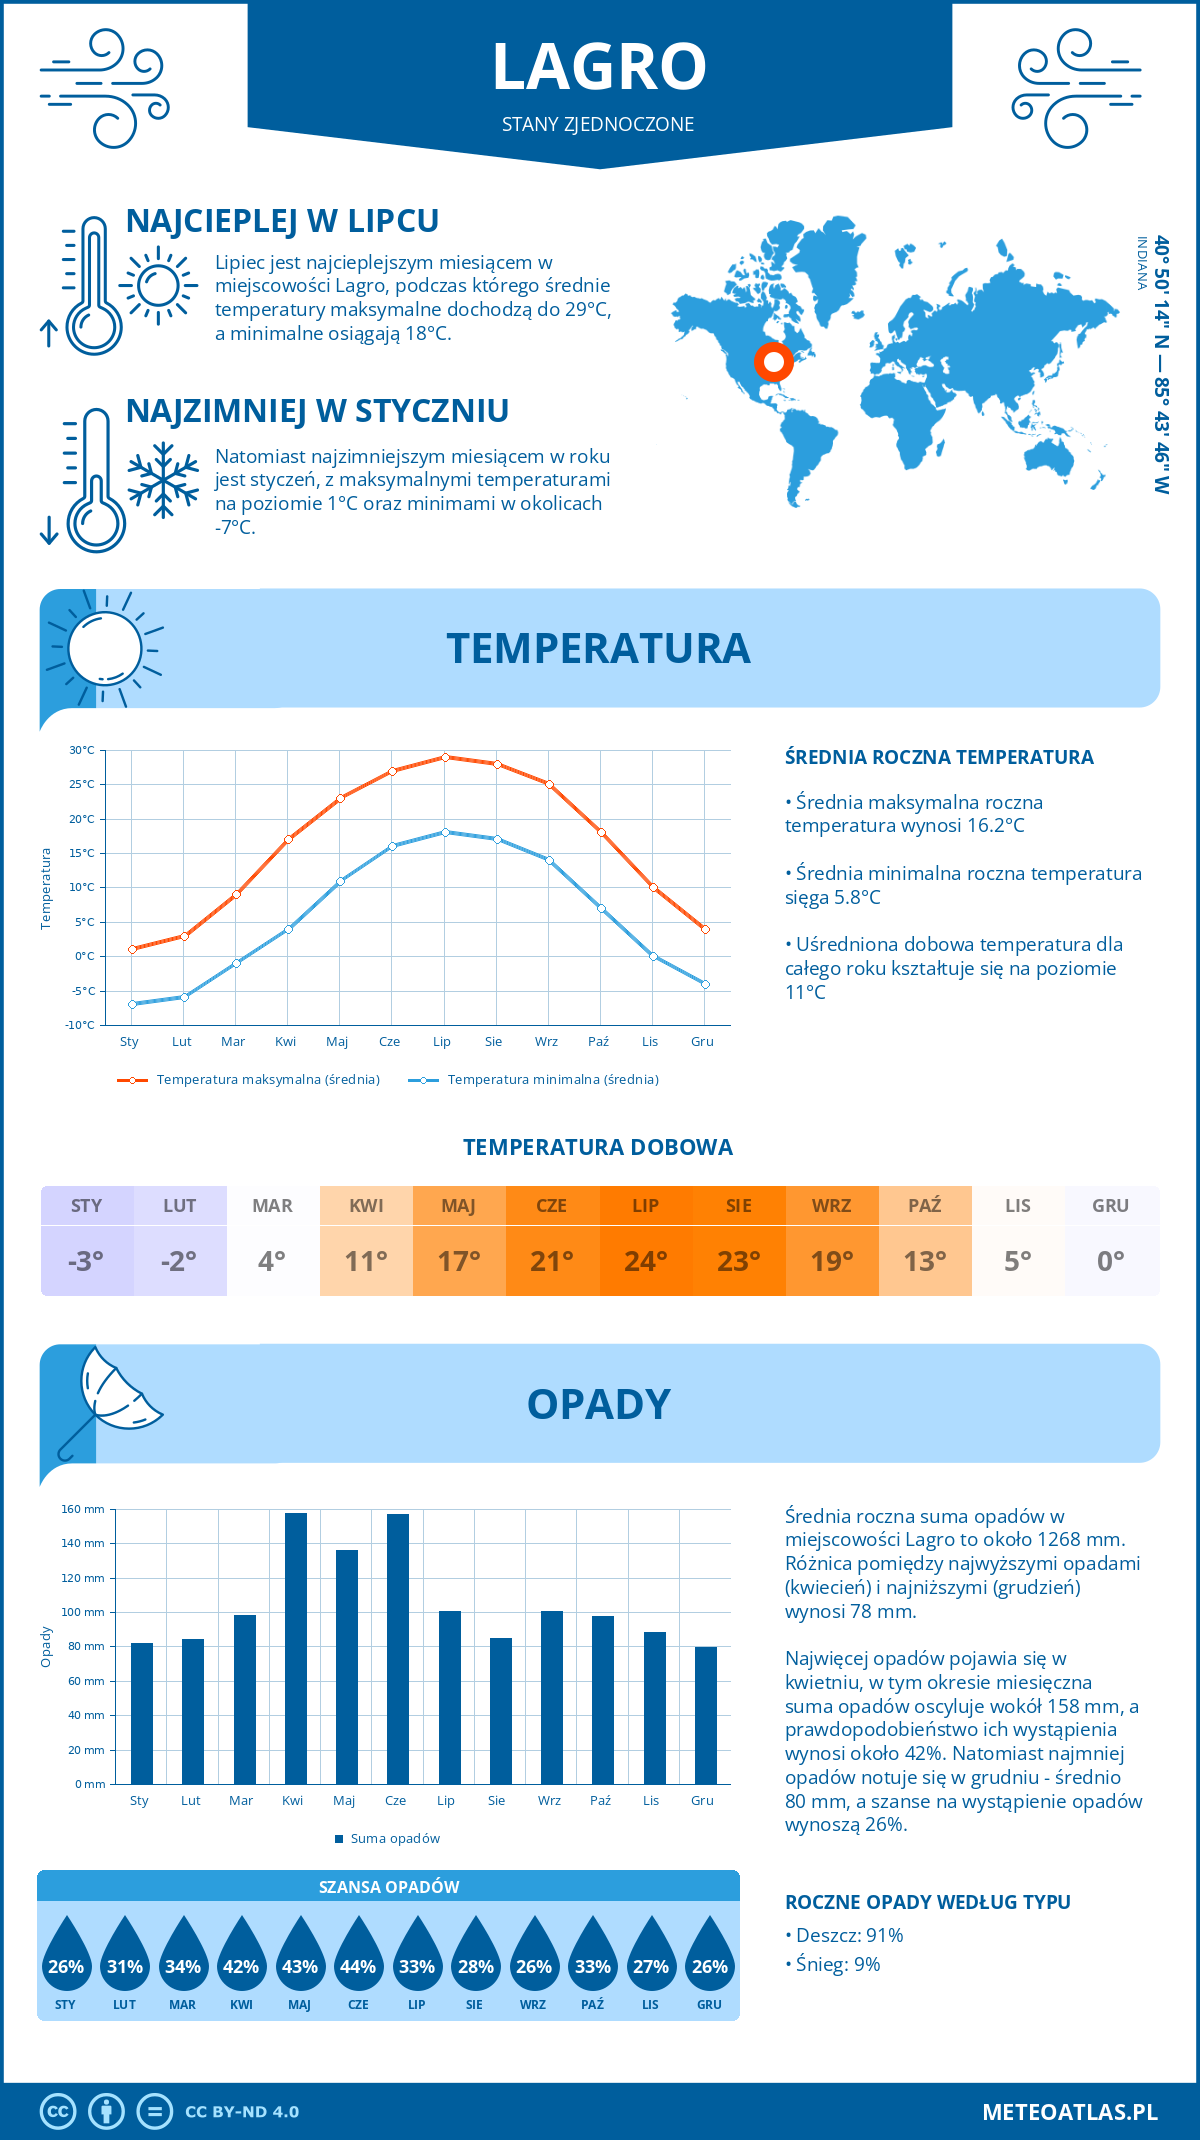 Pogoda Lagro (Stany Zjednoczone). Temperatura oraz opady.